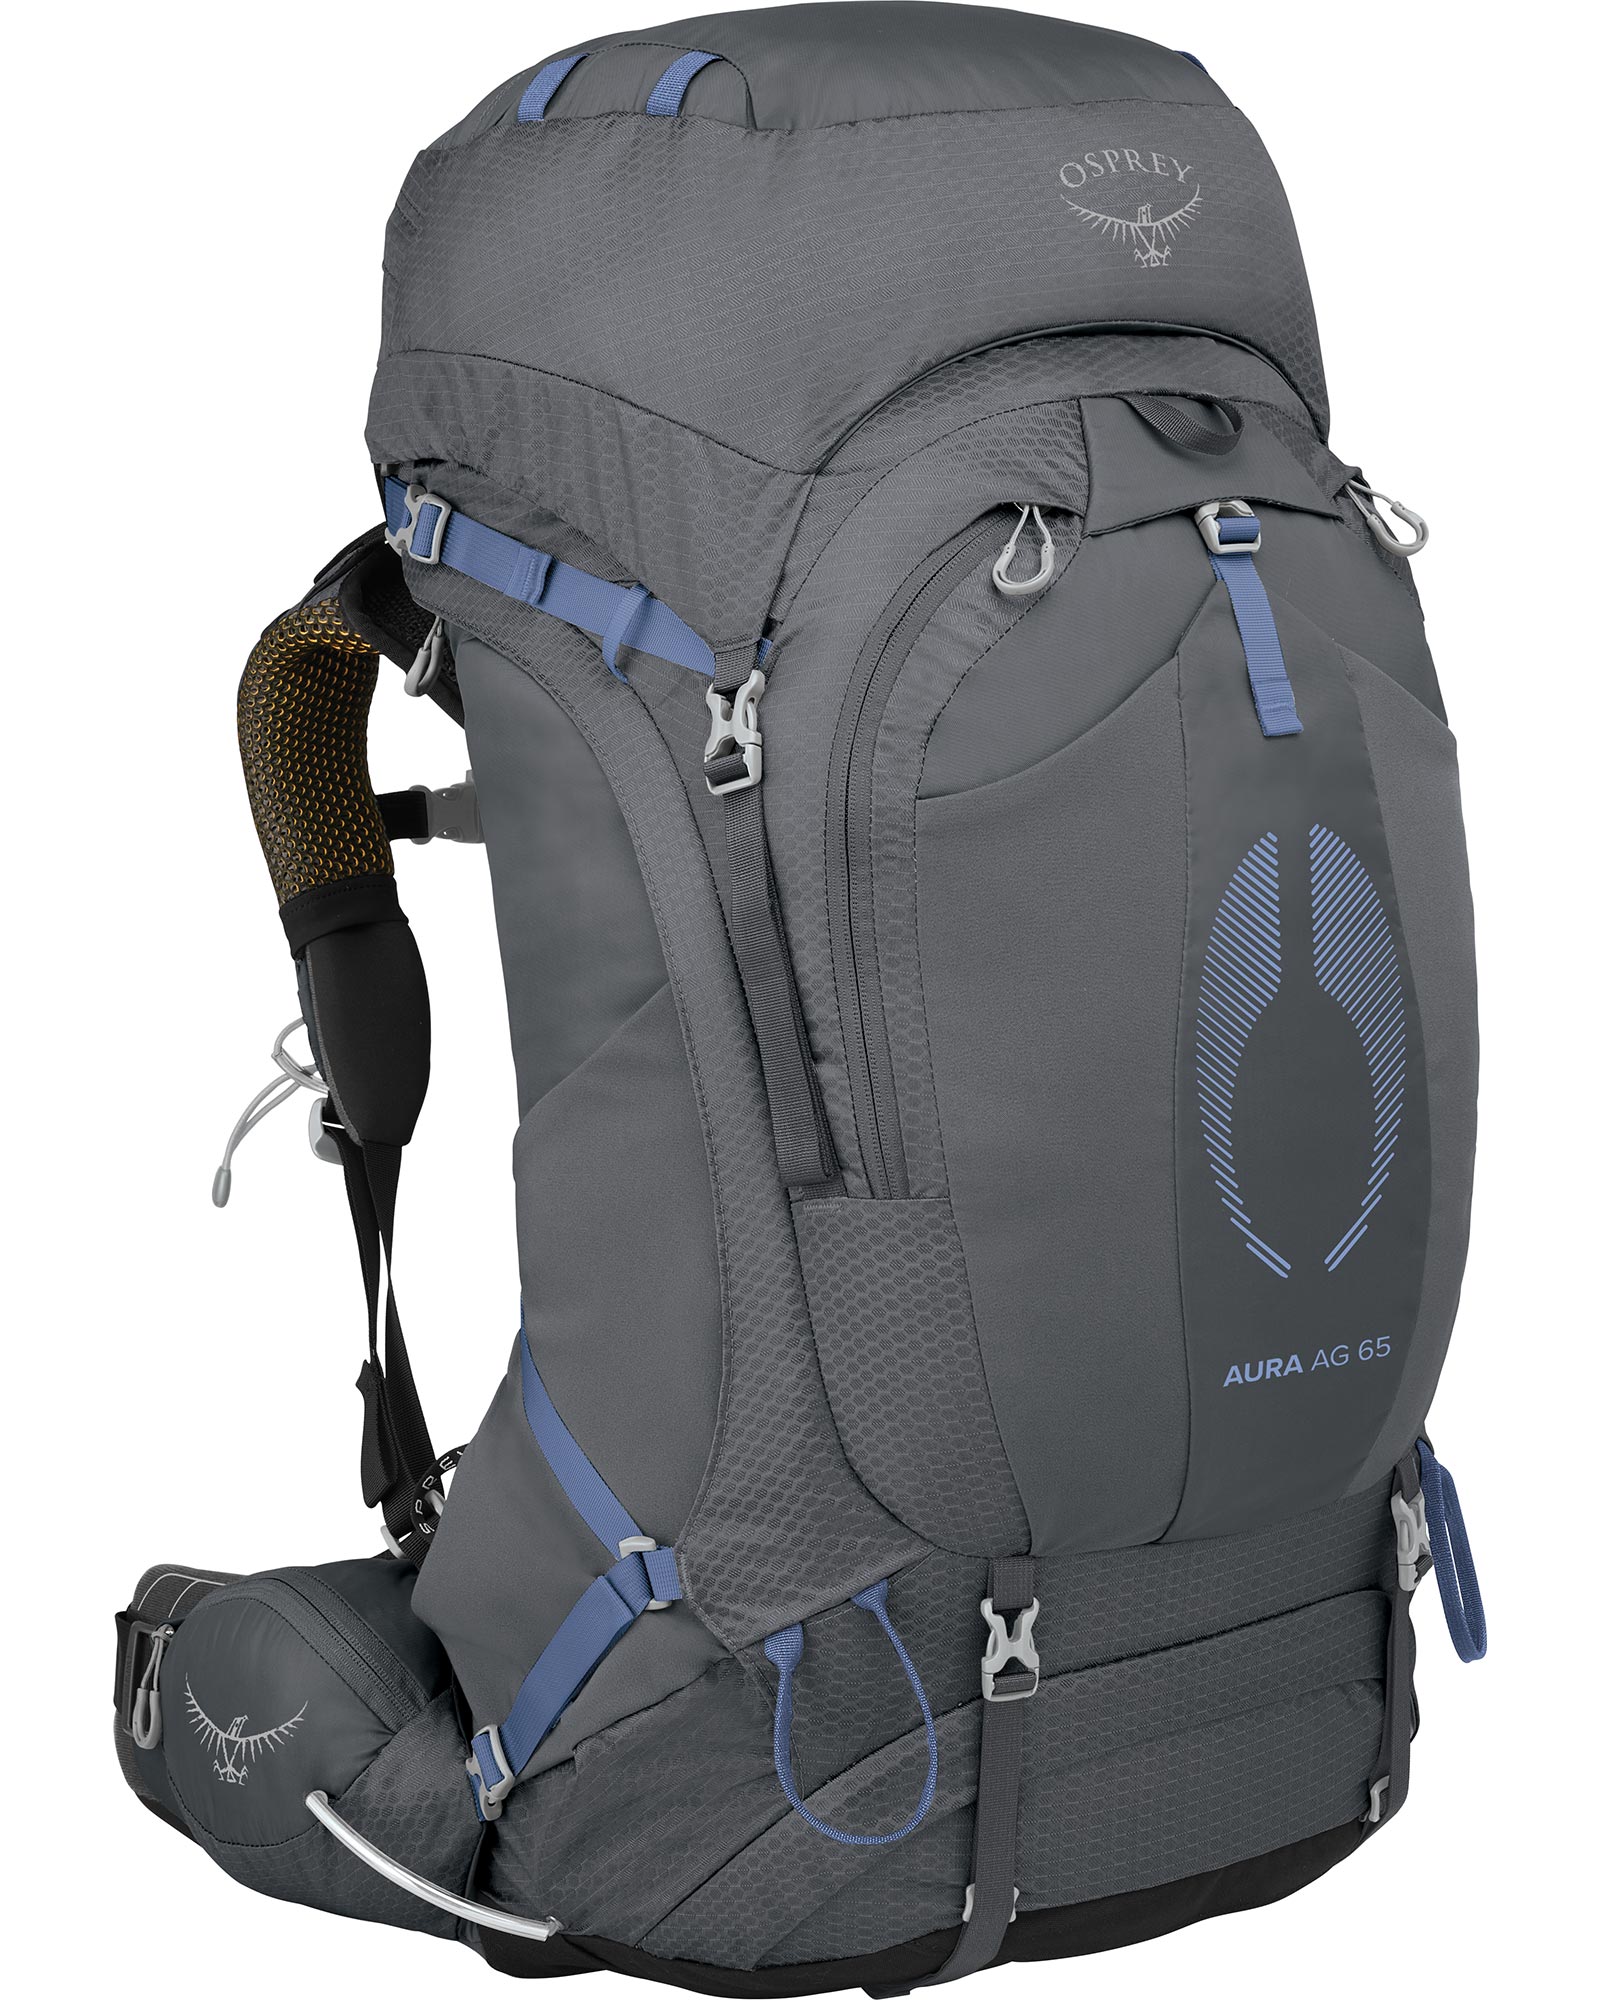 Osprey Aura AG 65 Women’s Backpack - Tungsten Grey M/L